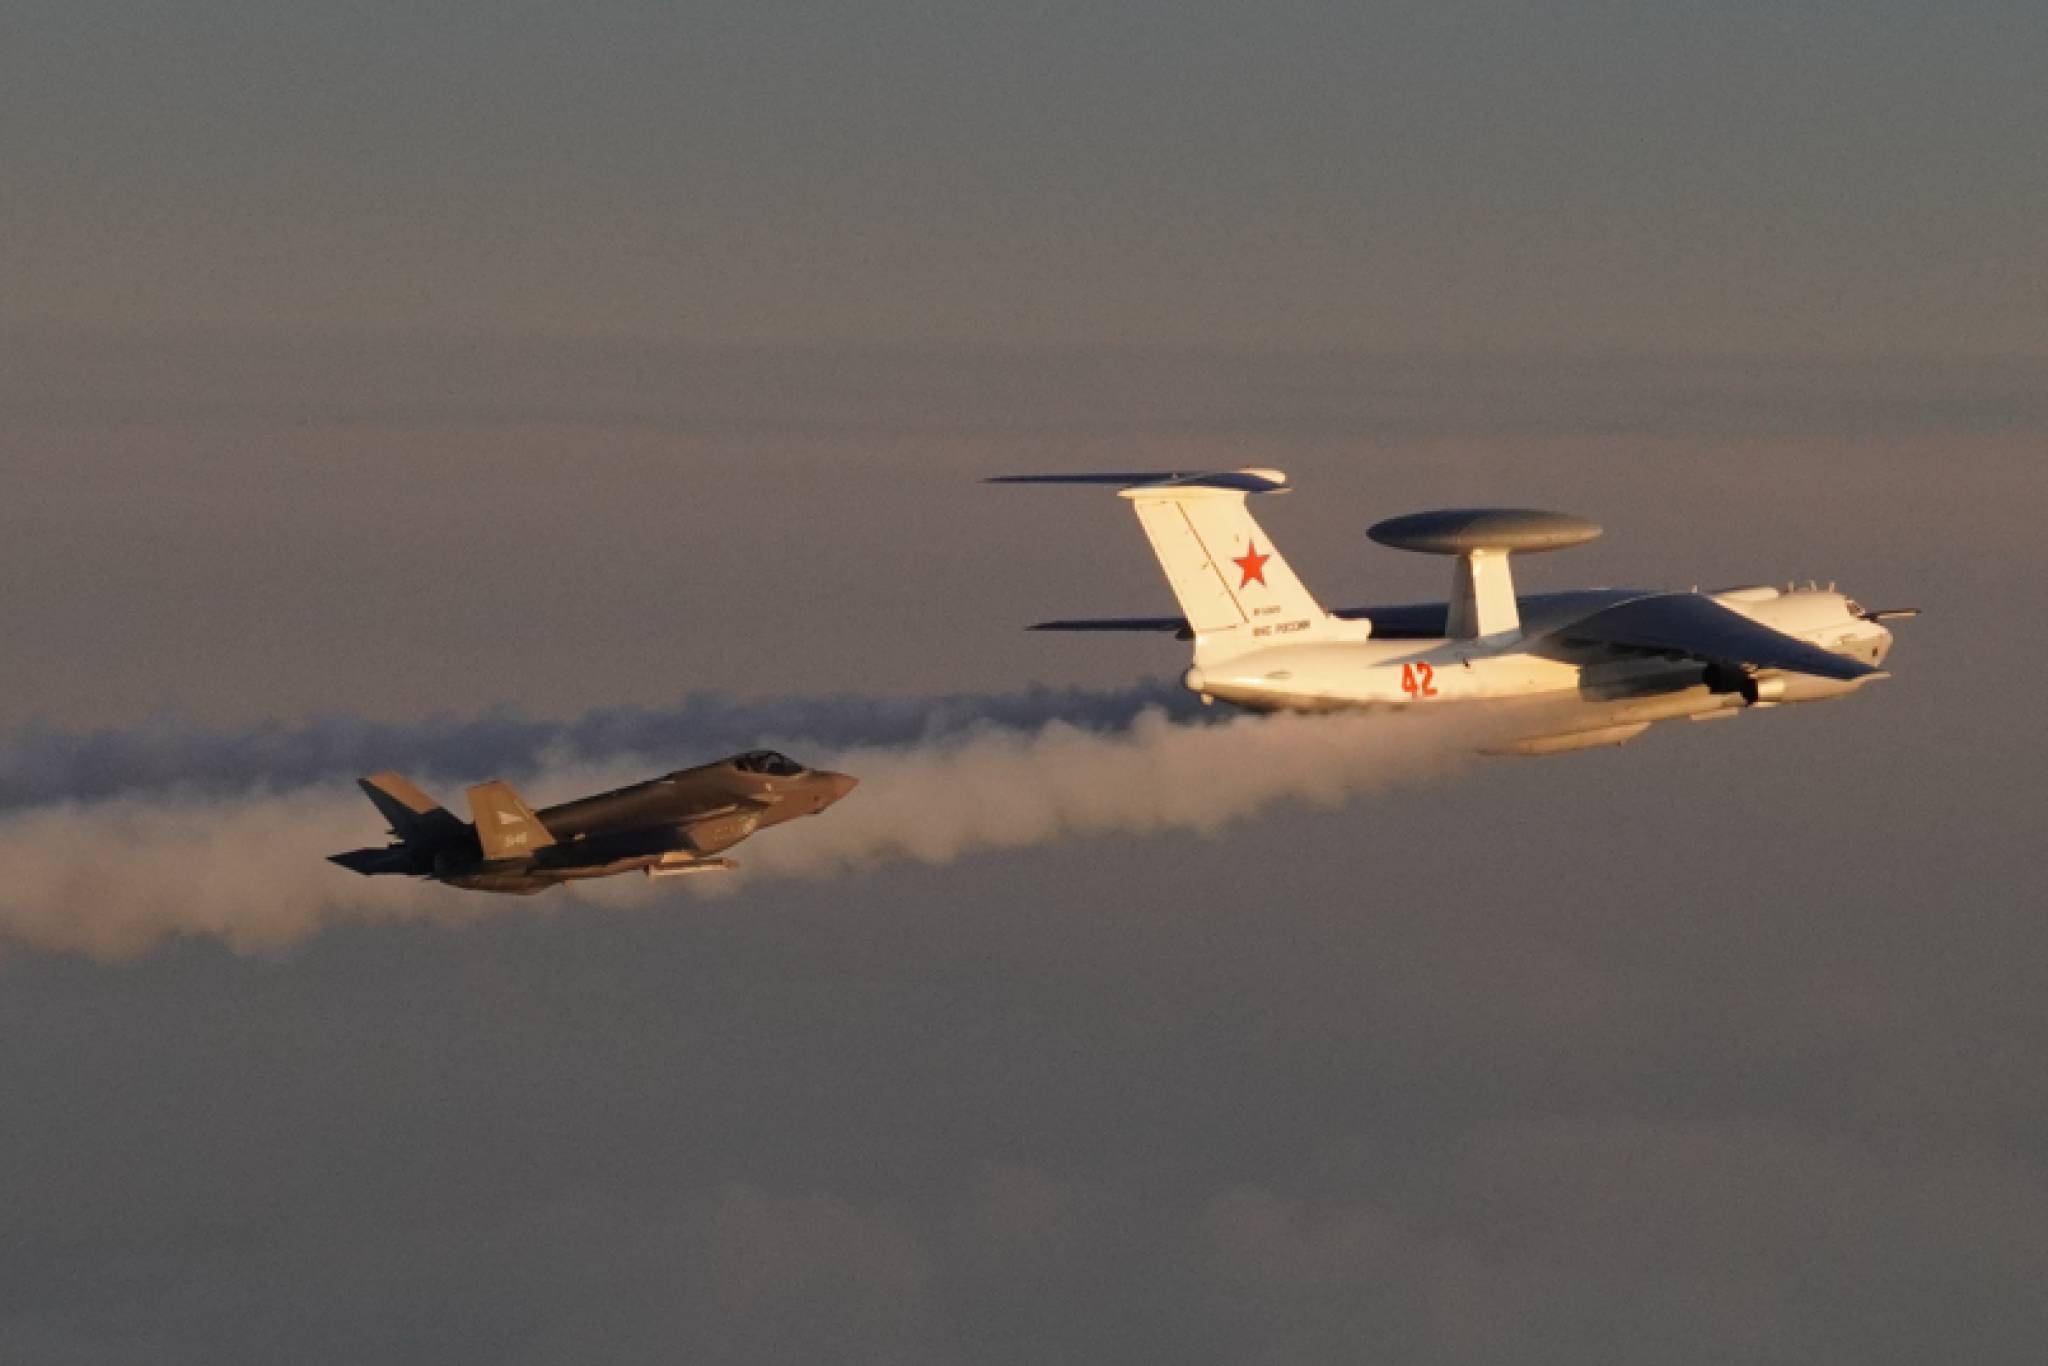 F-35 intercepting A-50 early warning aircraft